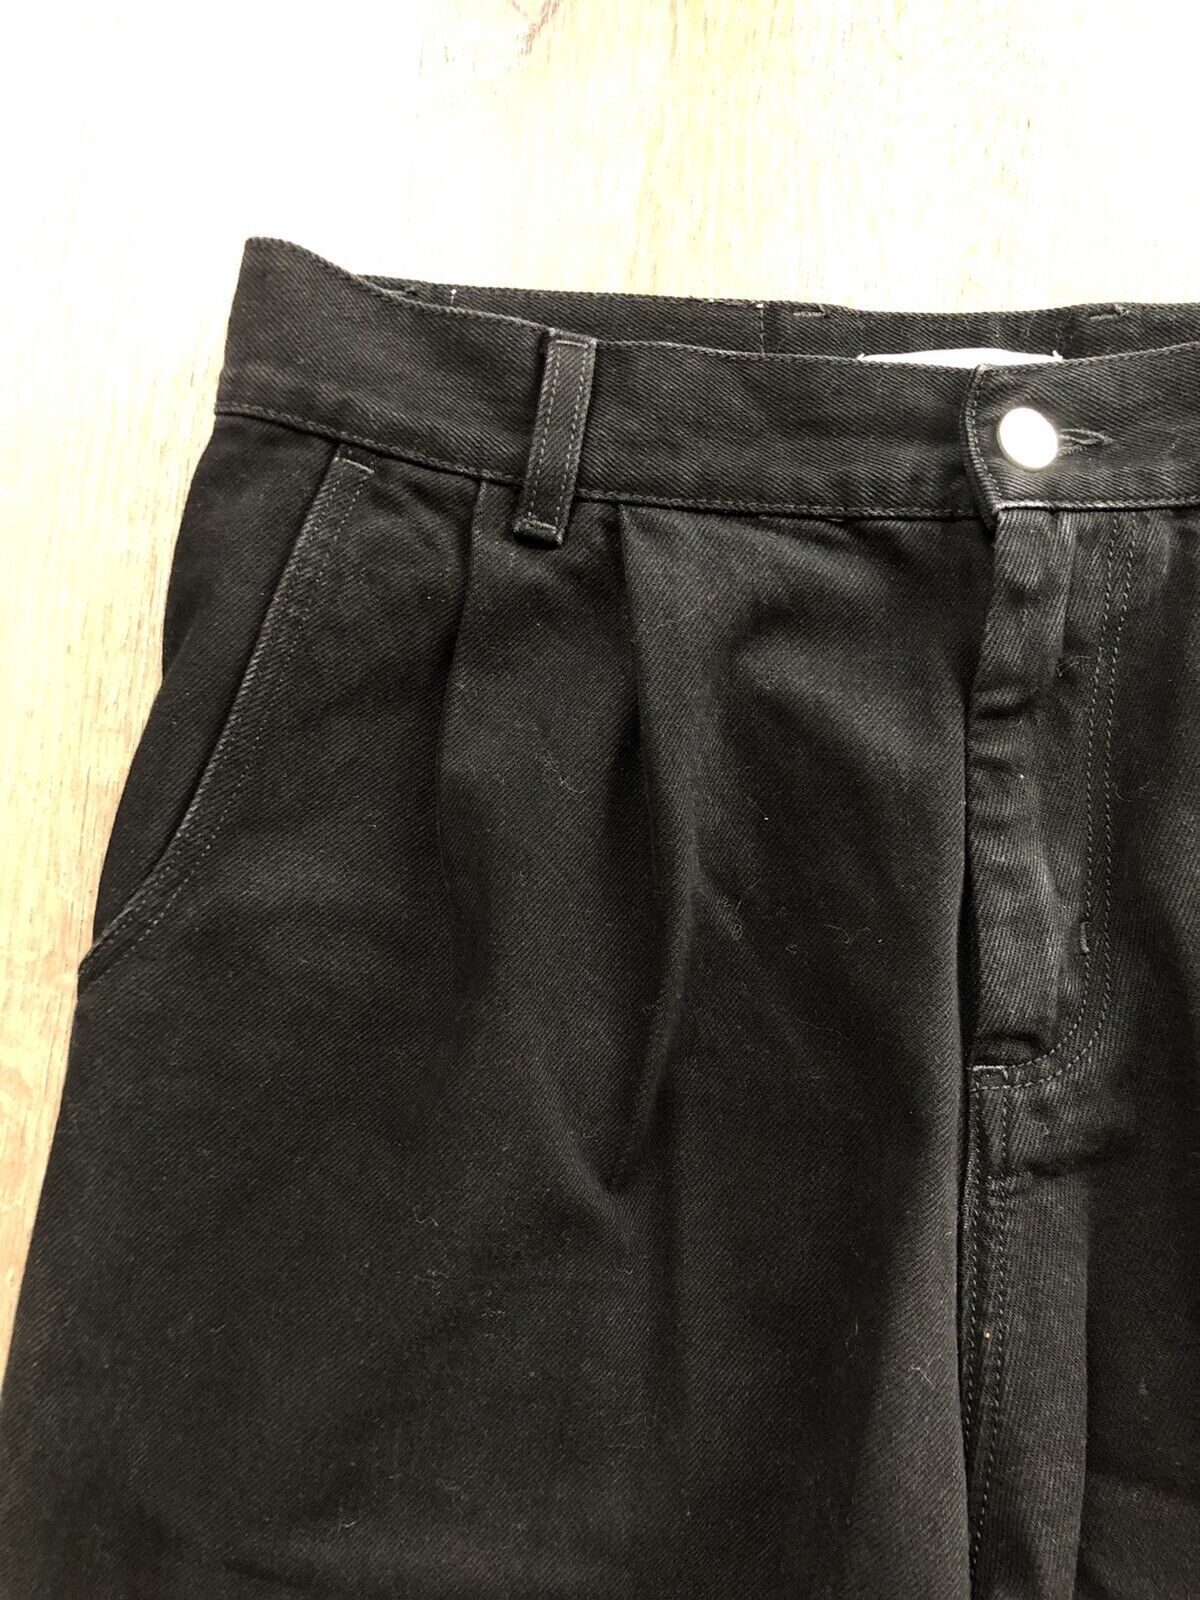 Mfpen Big Jeans Black Mens Size Small | eBay